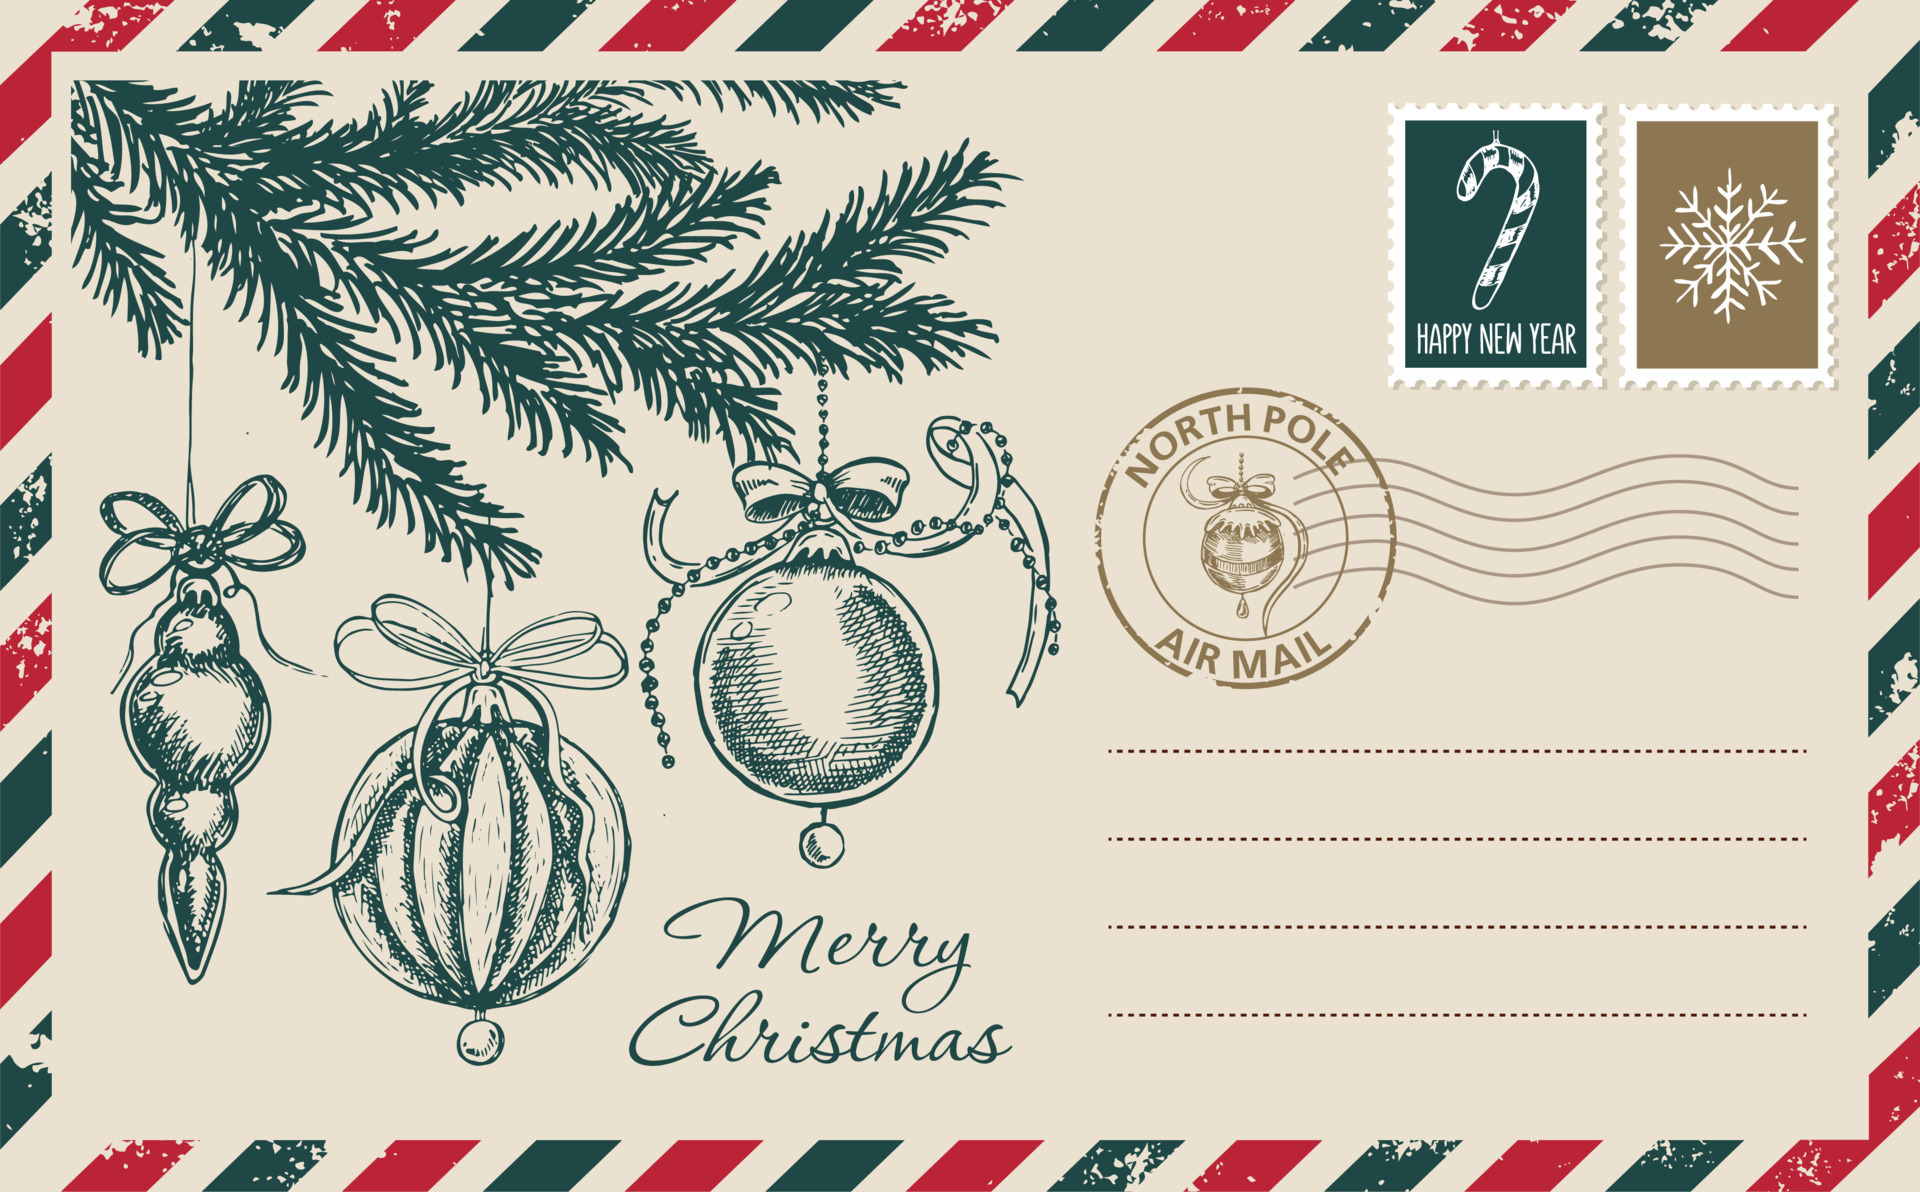 https://static.vecteezy.com/system/resources/previews/007/705/927/original/christmas-mail-postcard-hand-drawn-illustration-vector.jpg